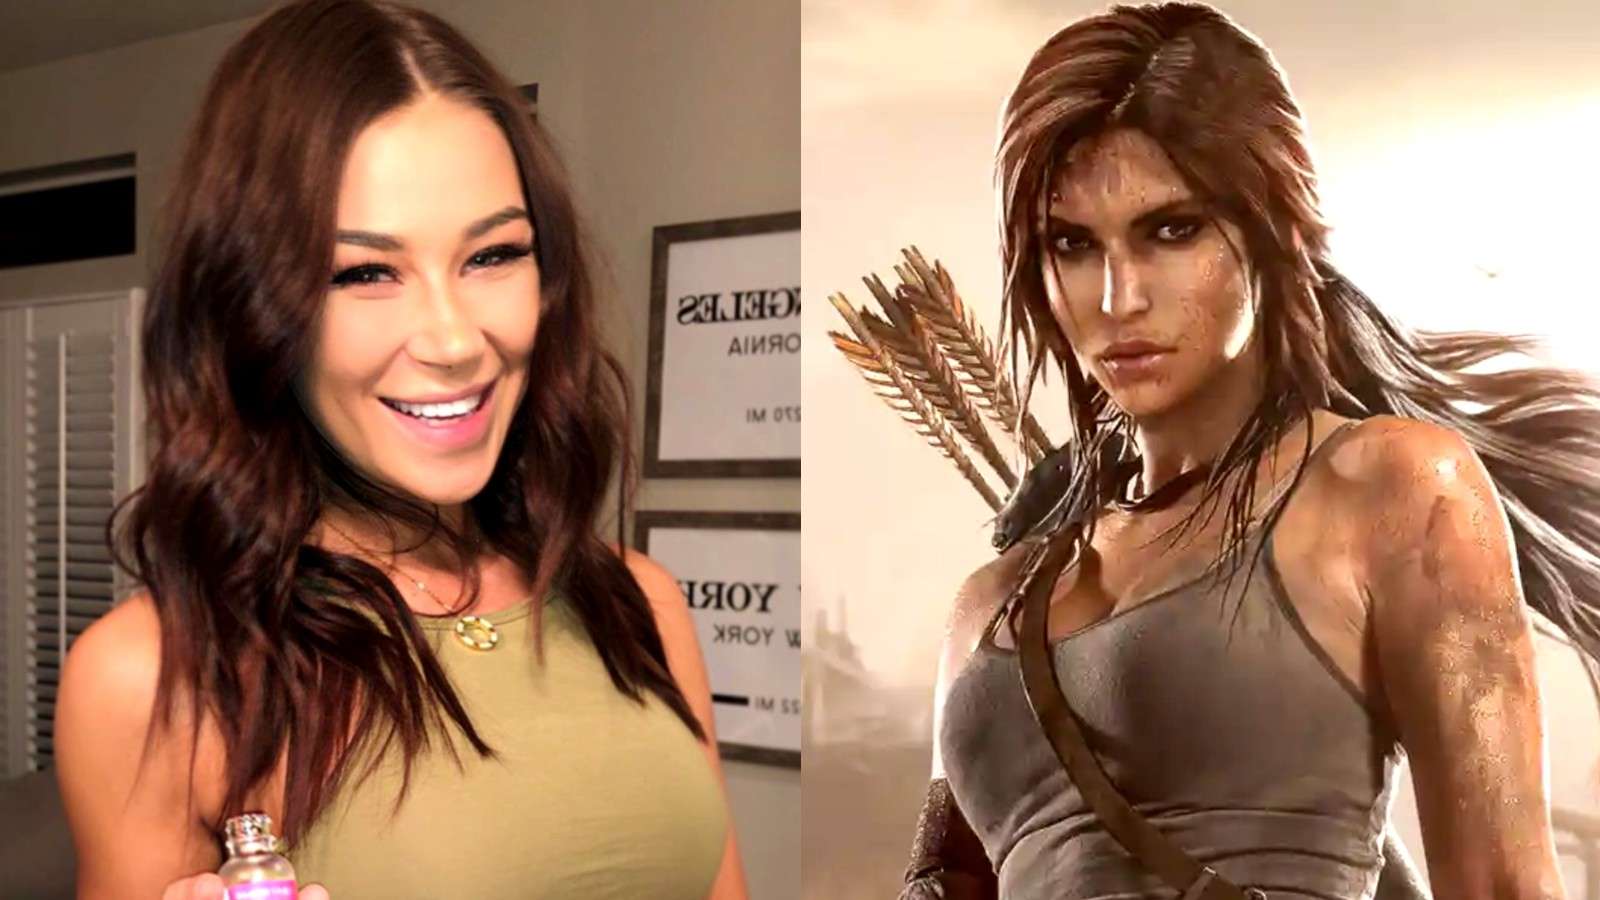 Lara Croft and her cosplayer